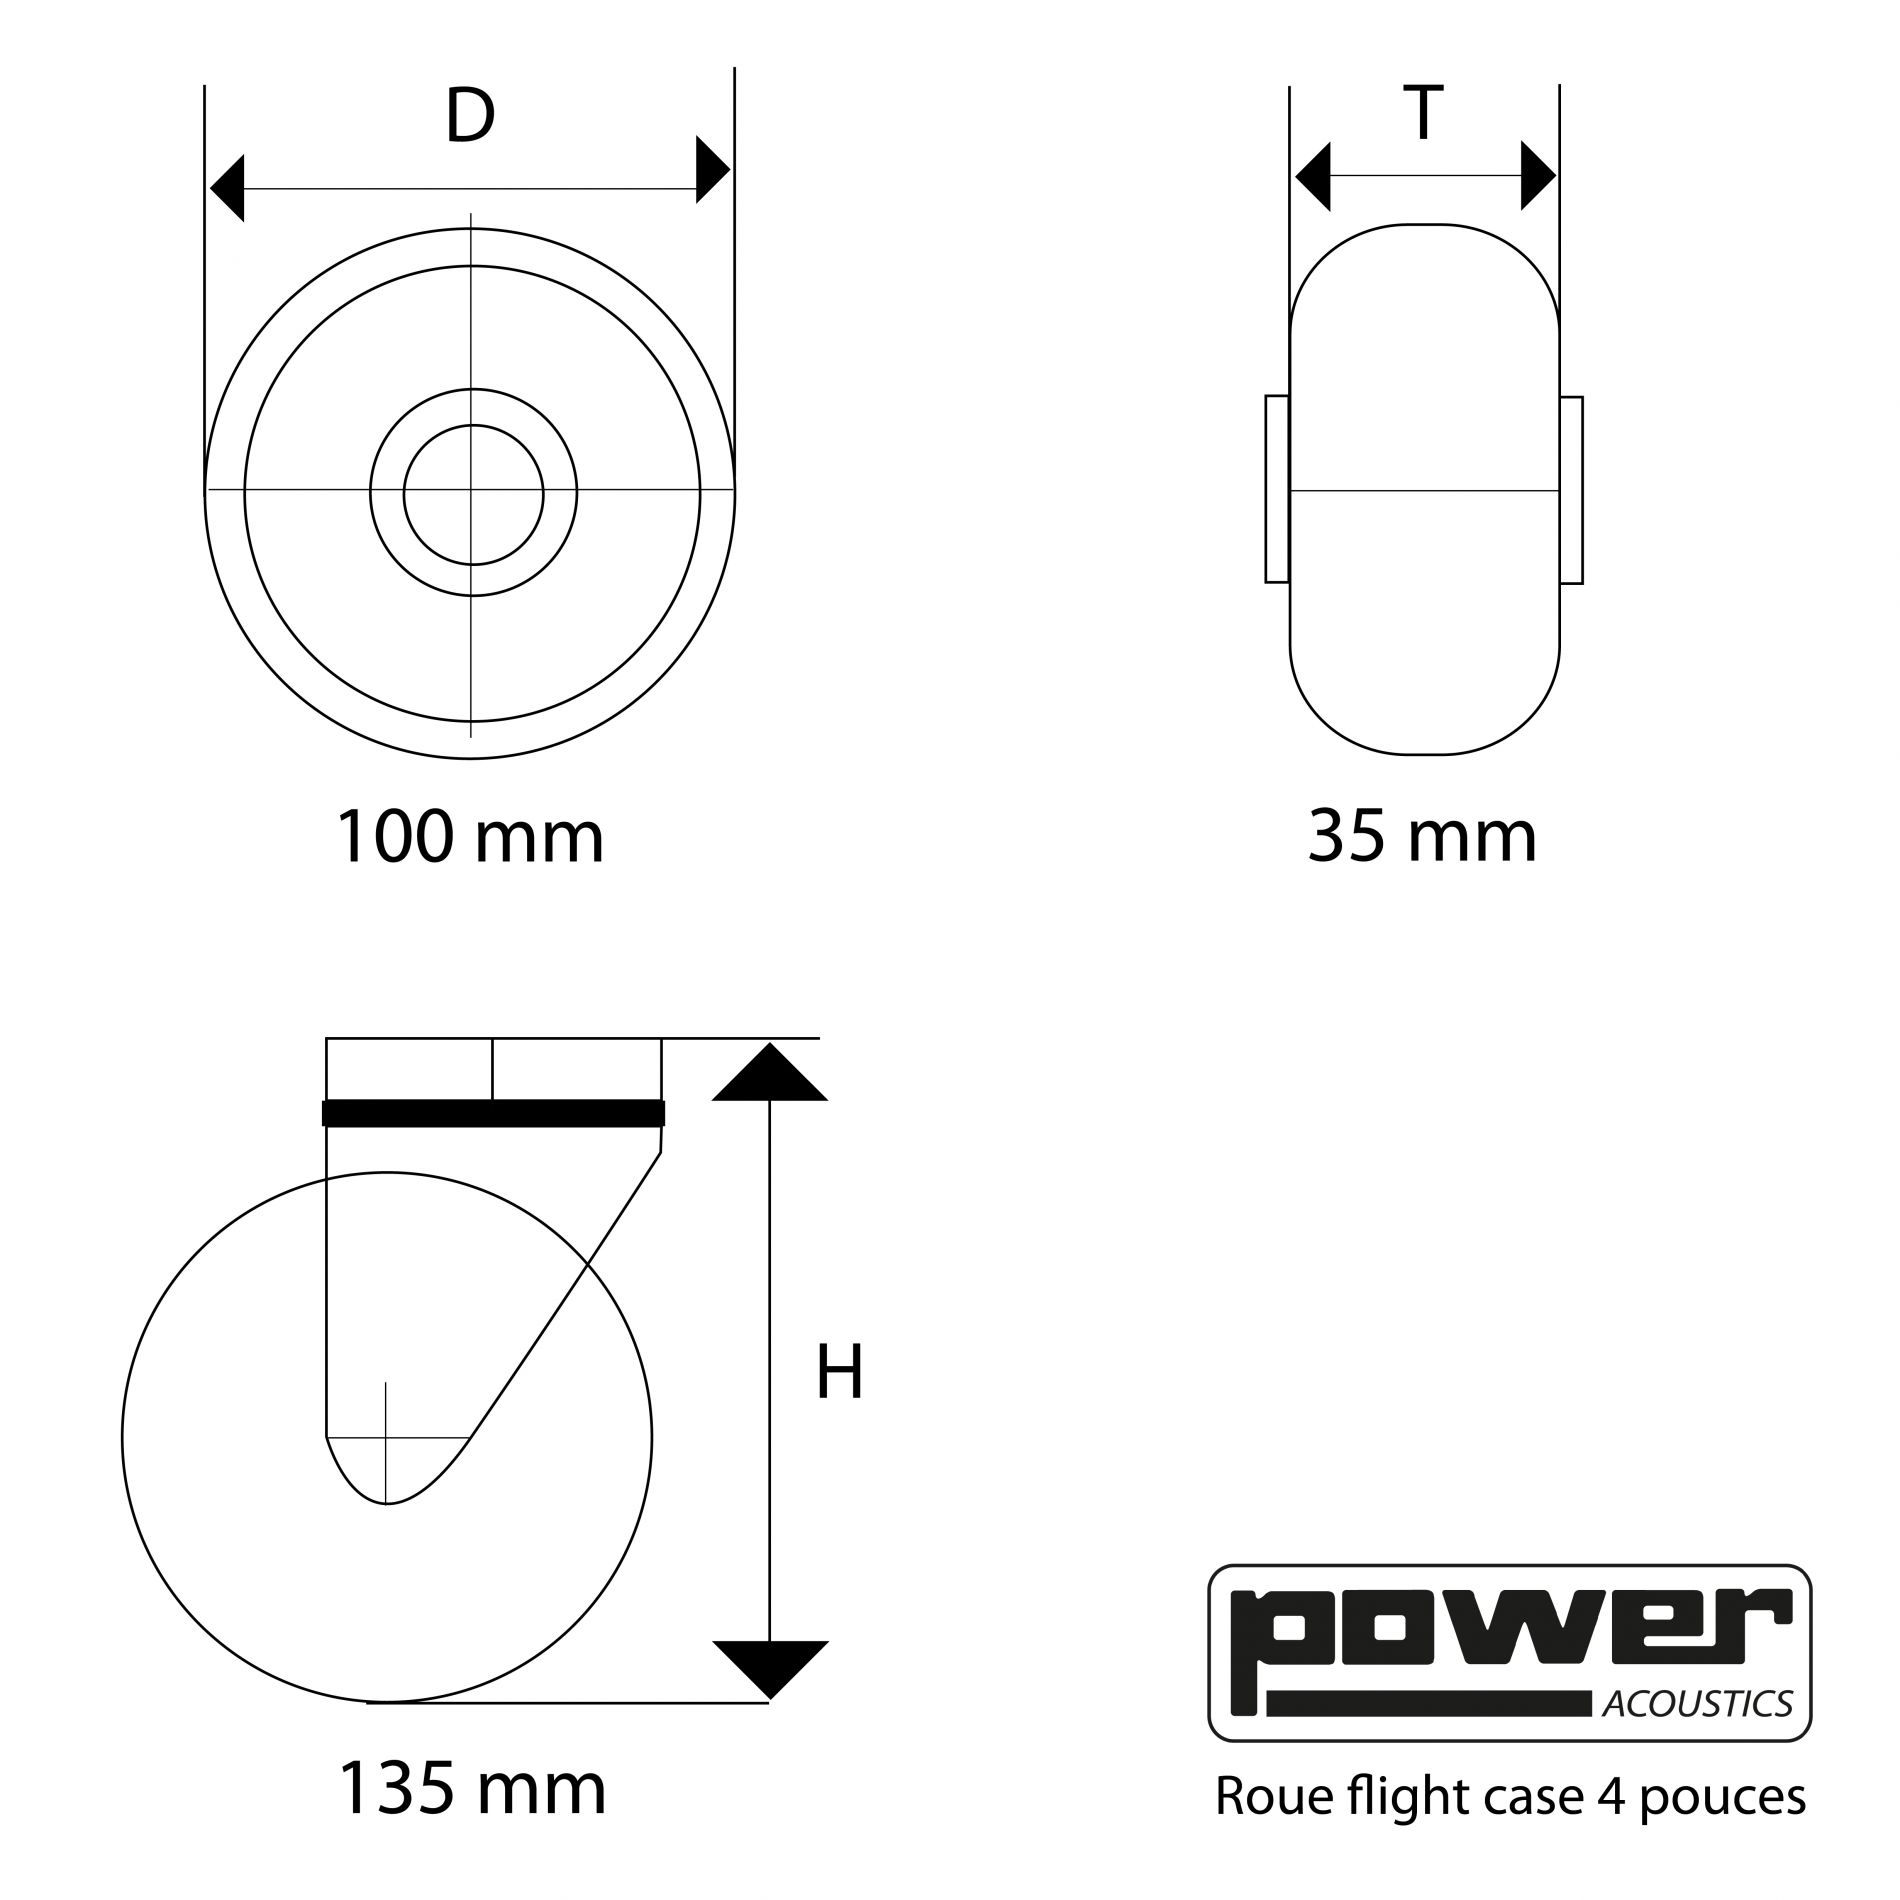 Power Acoustics Roue Flight Case 4 Pouces - - Bag & flightcase for lighting equipment - Variation 2